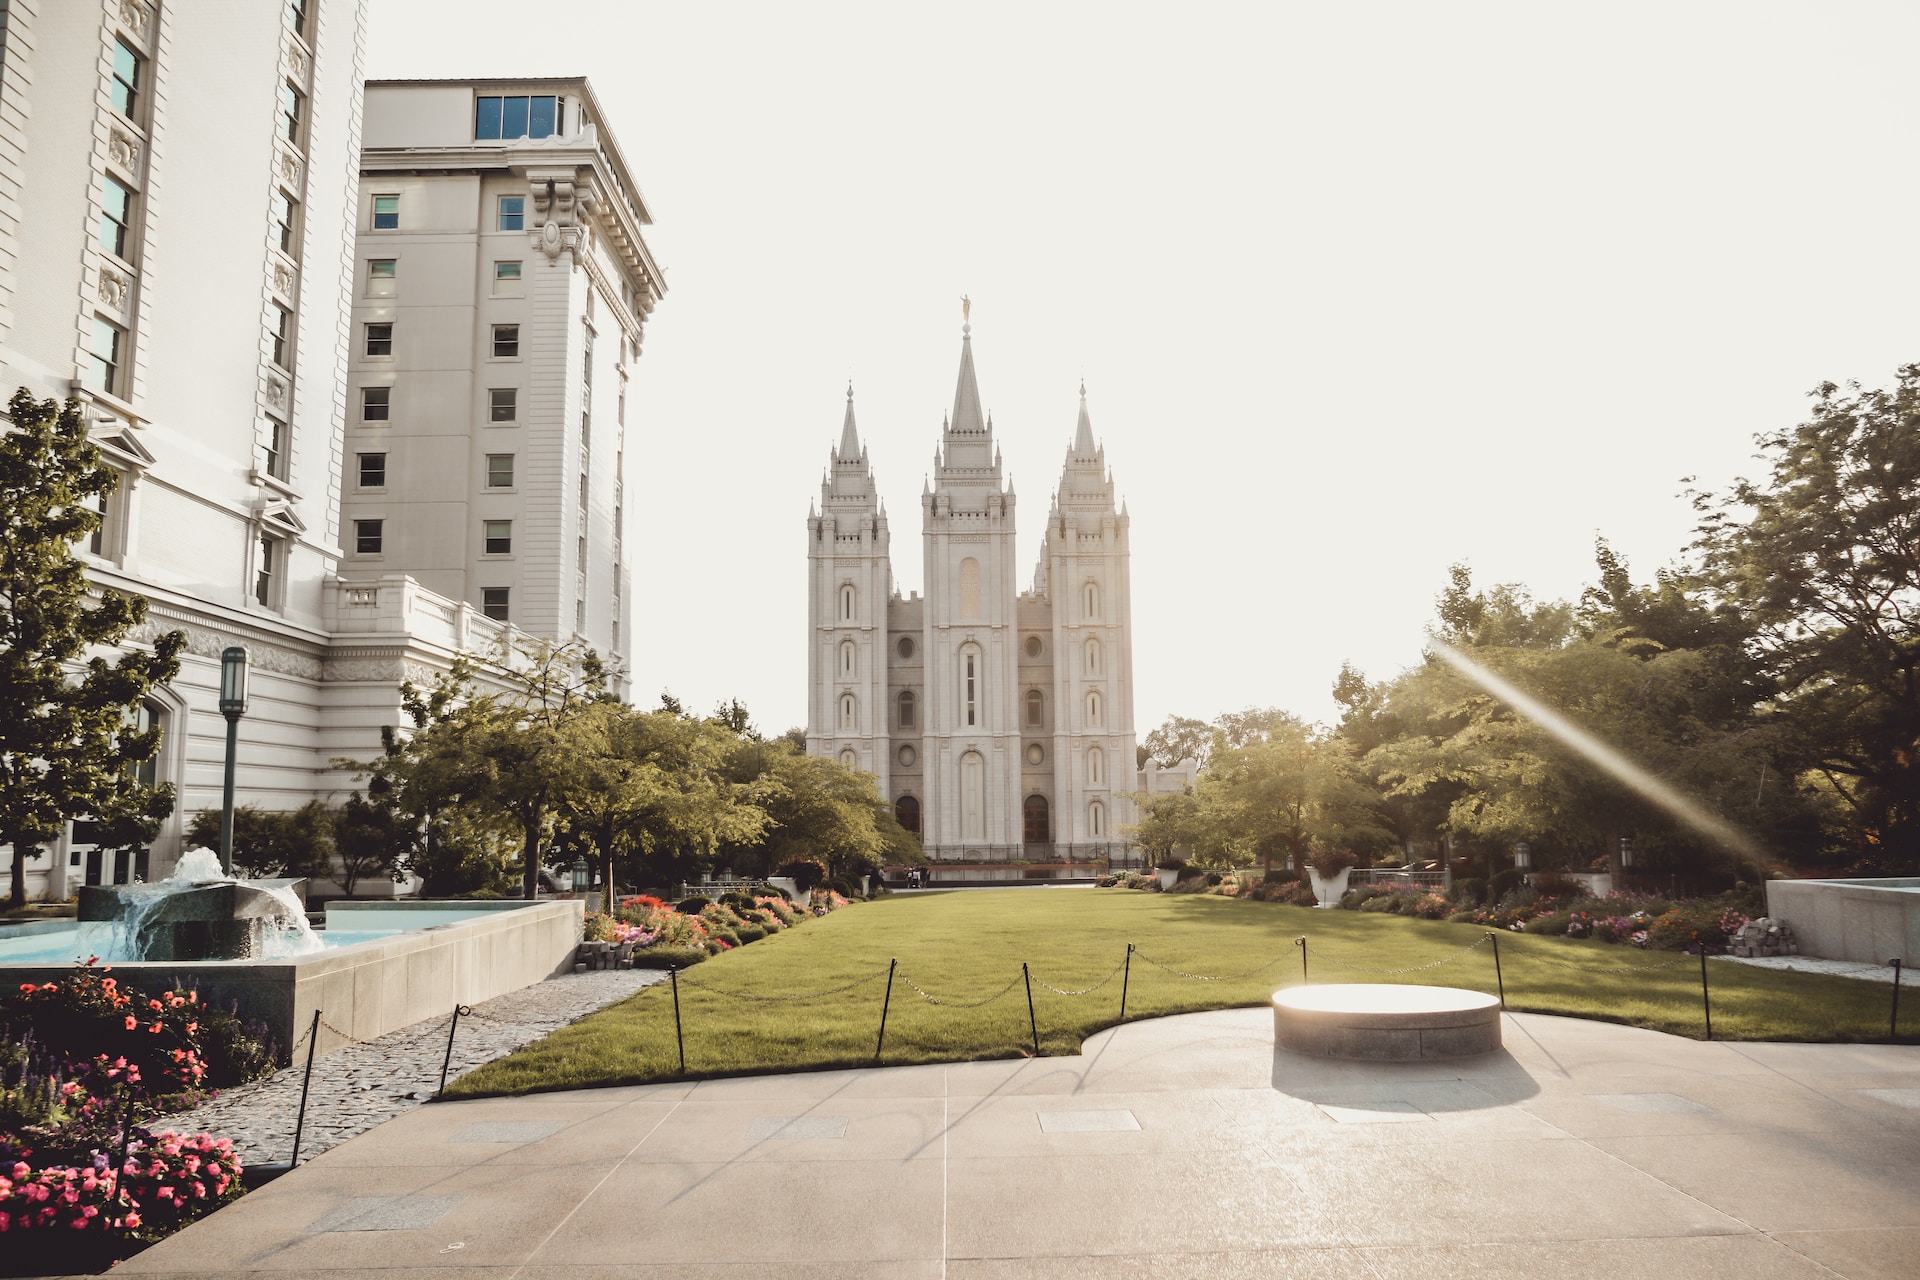 A marvelous structure – the Salt Lake Temple.